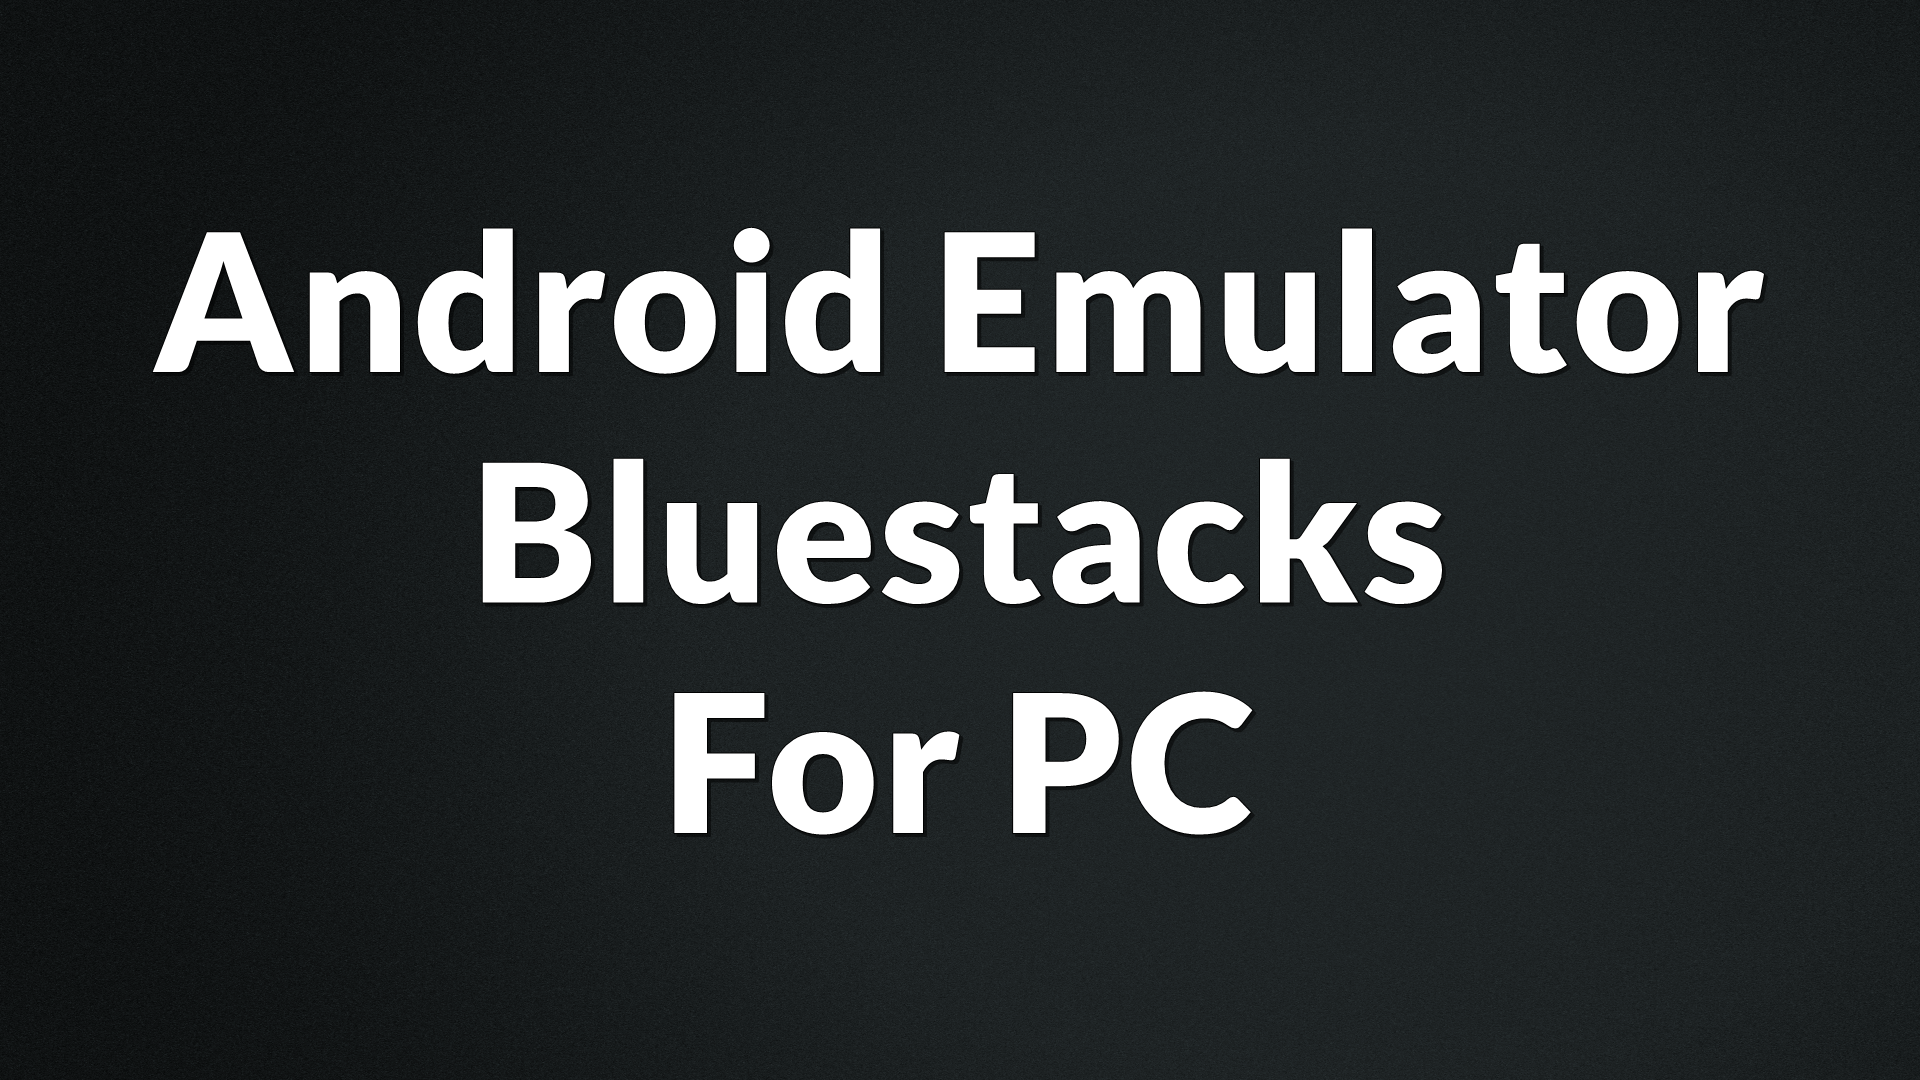 Android Emulator Bluestacks For PC